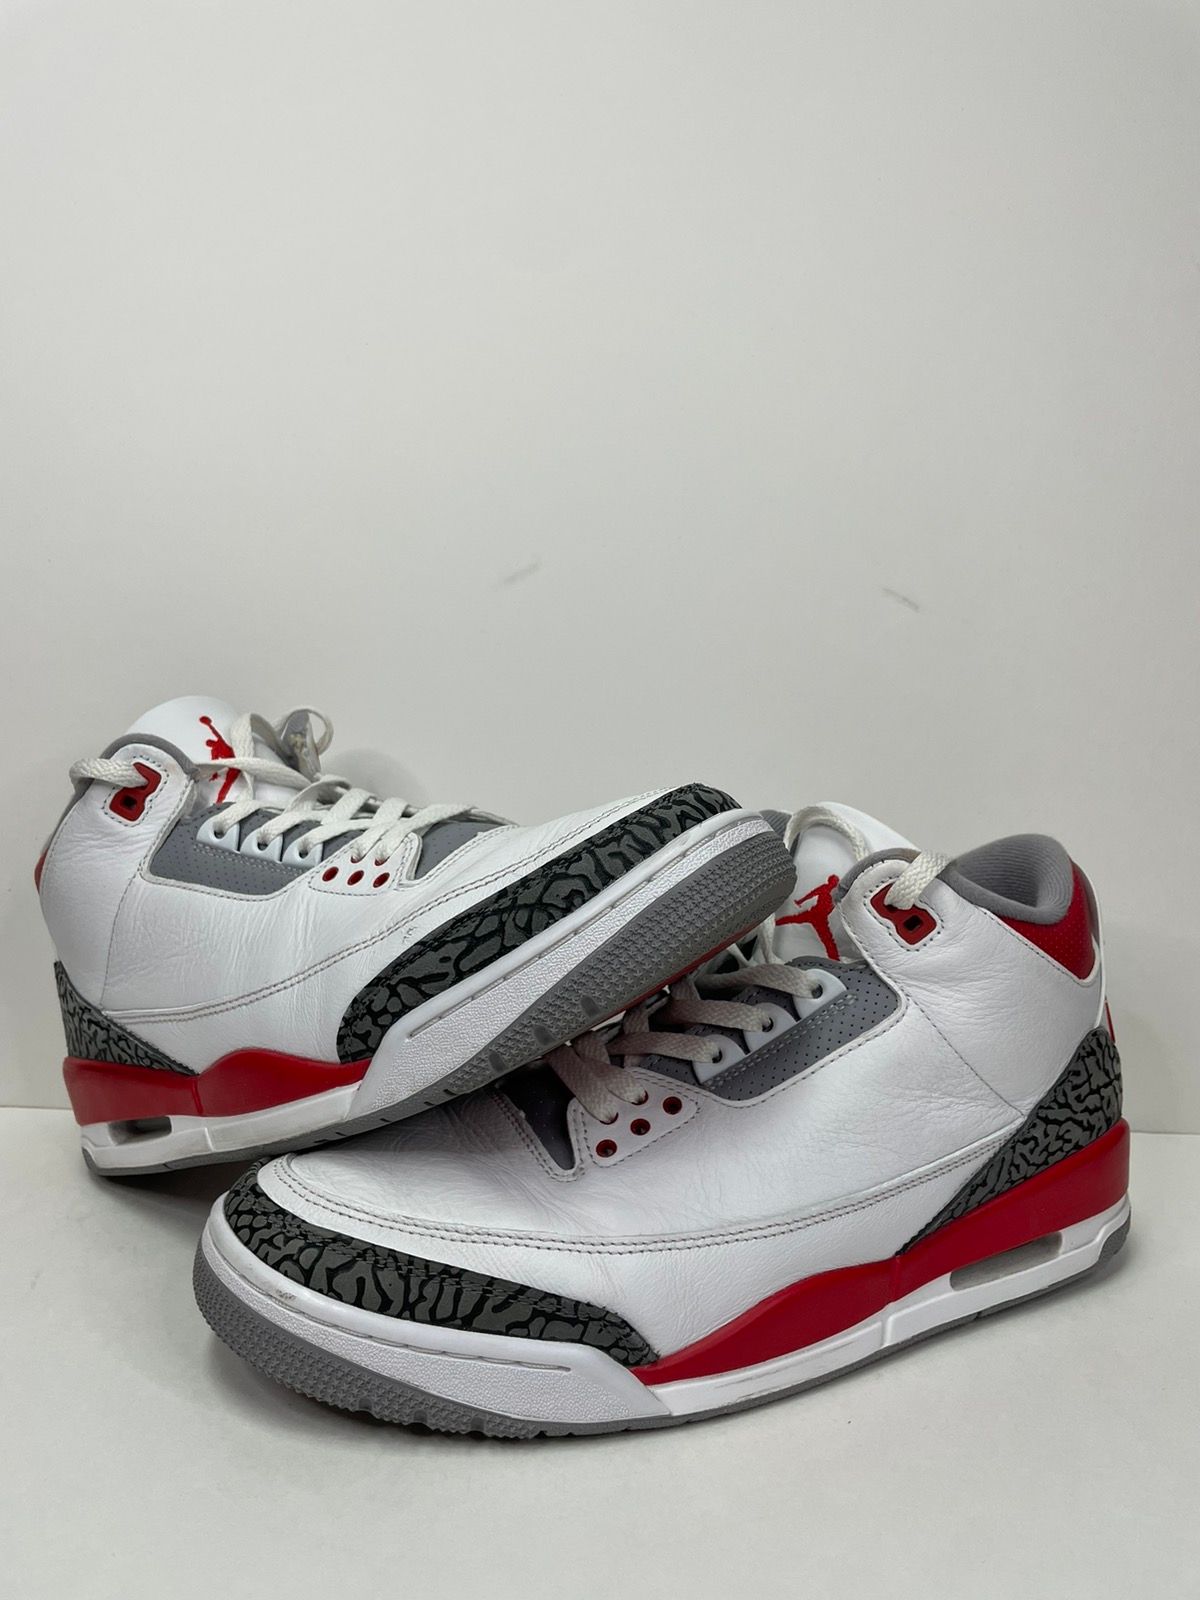 Pre-owned Jordan Brand Air Jordan 3 Retro Fire Red 2022 Shoes In White